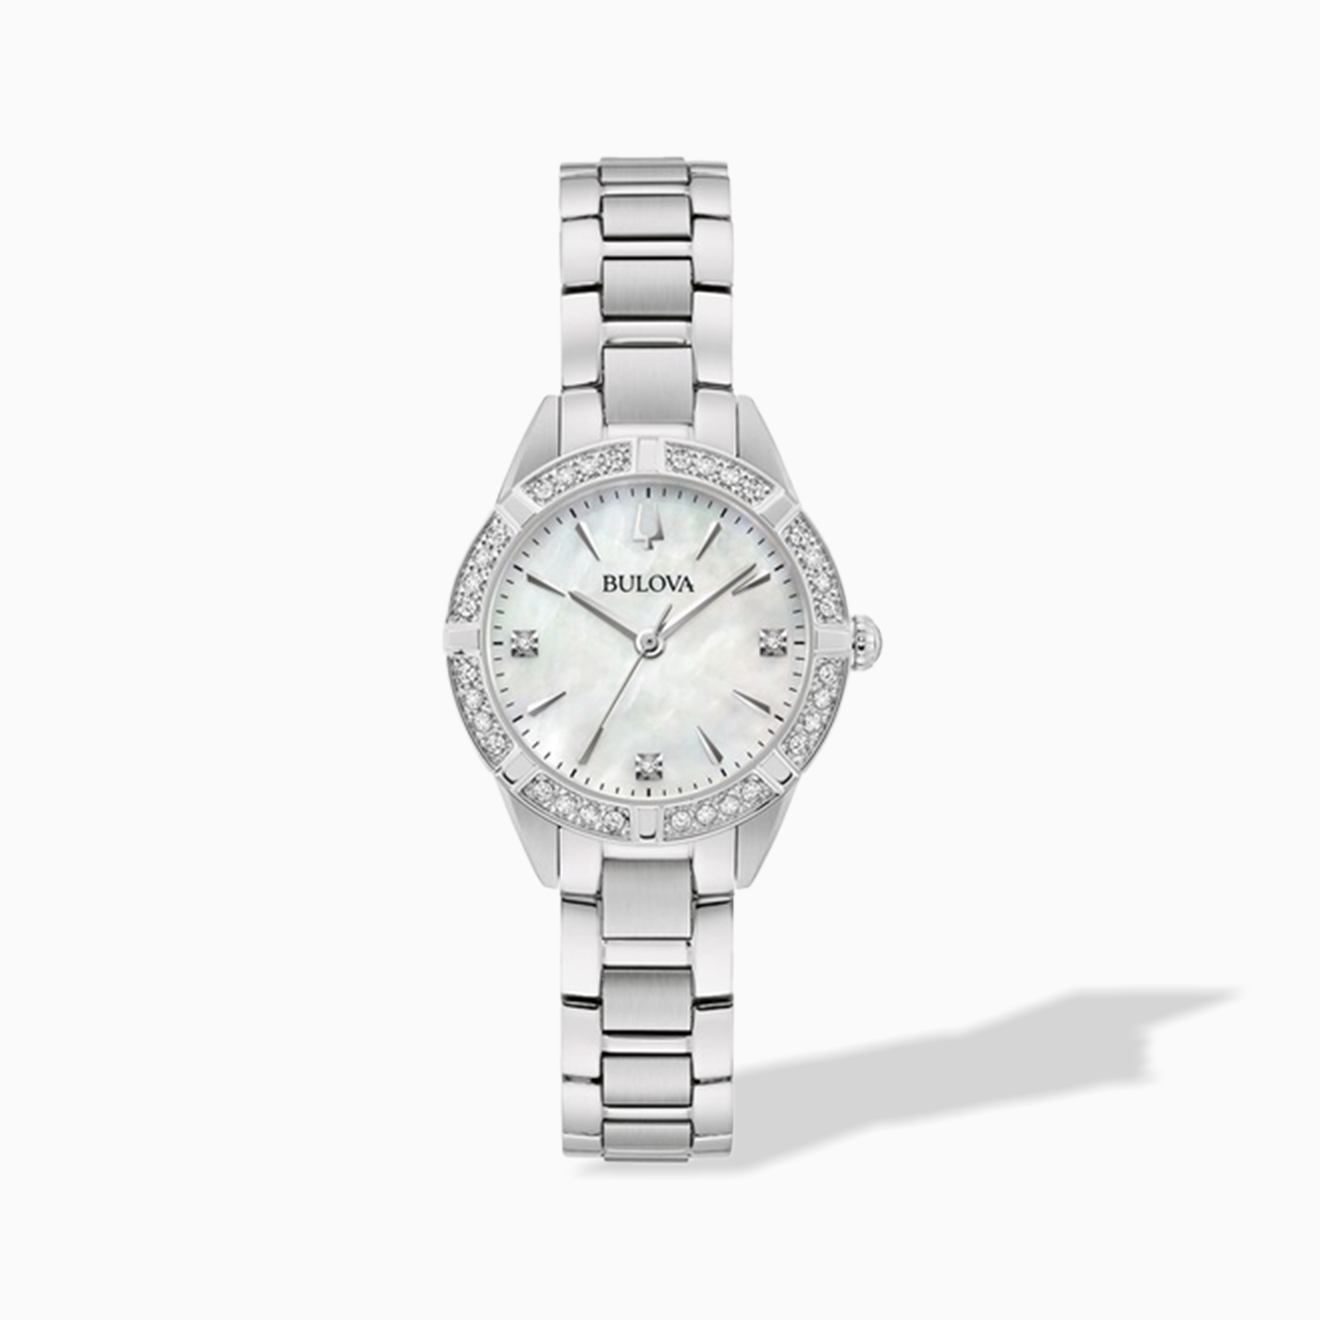 Shop diamond watches